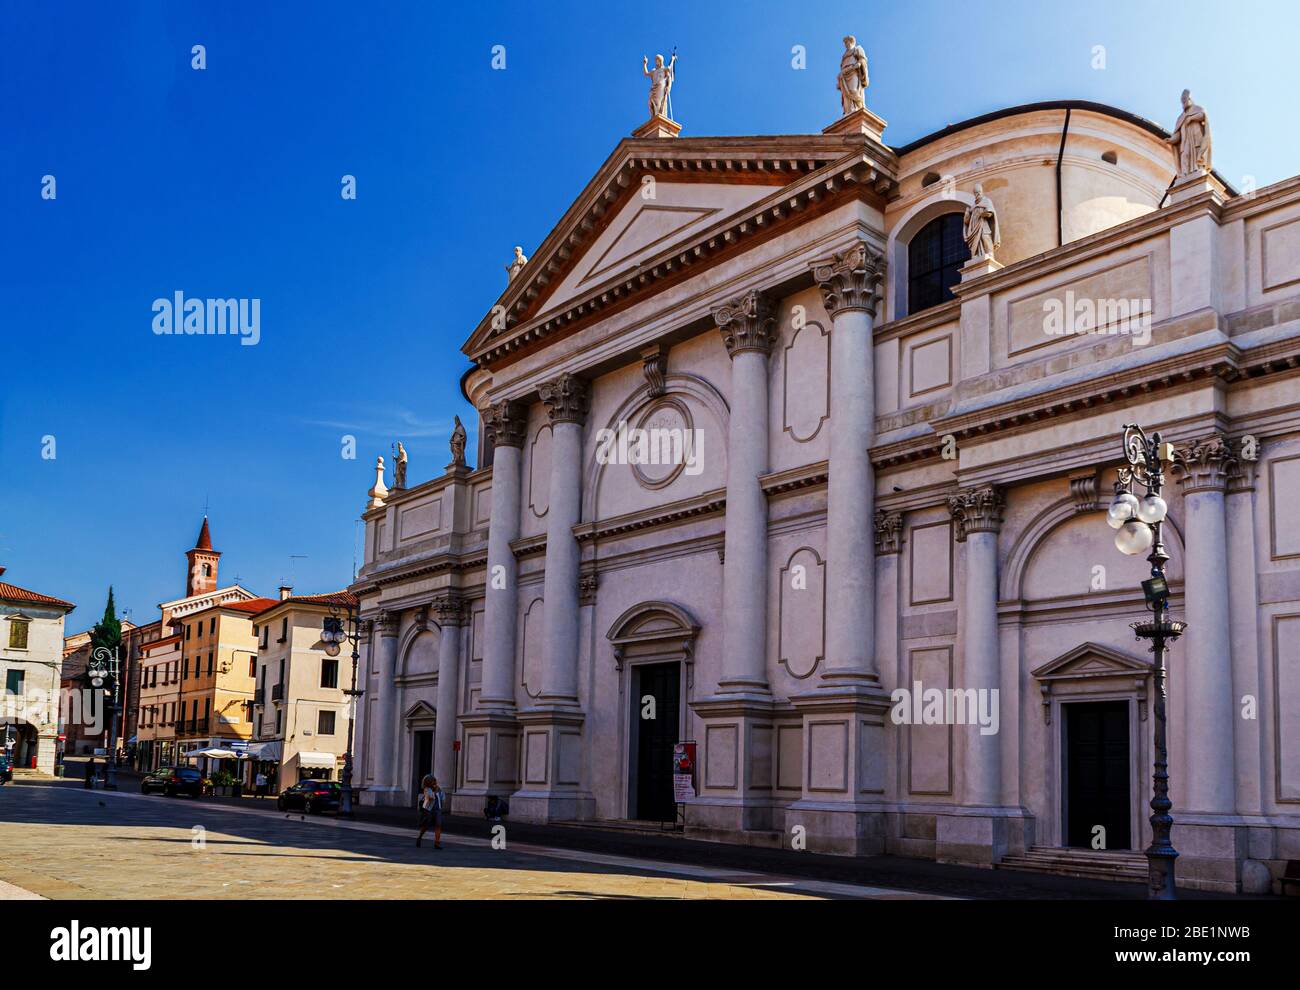 Bassano del Grappa, Vicenza / Italia - 2 de octubre de 2017: La iglesia de San Giovanni (San Juan) el Bautista en Bassano del Grappa, Vicenza, Italia. Foto de stock